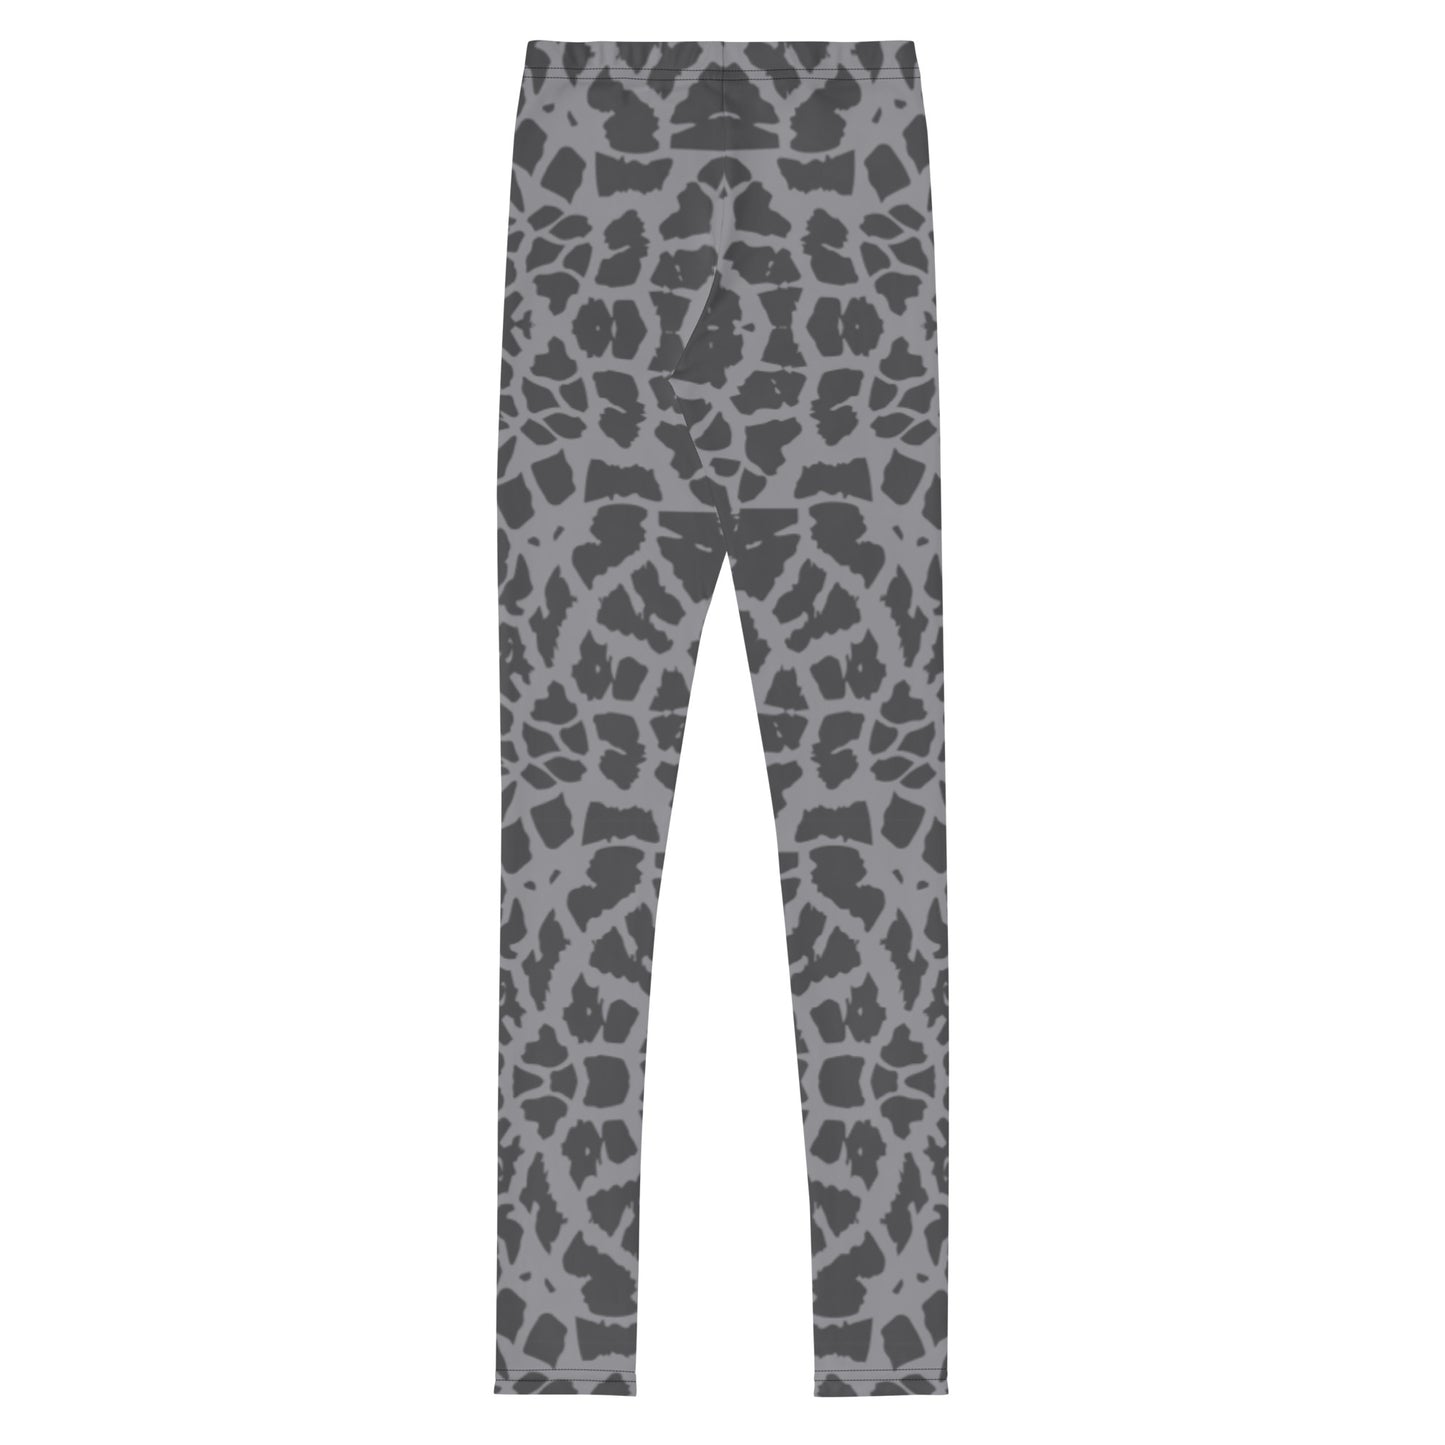 Trendy Giraffe Skin Youth Leggings (Grey & Brown) - Sport Finesse